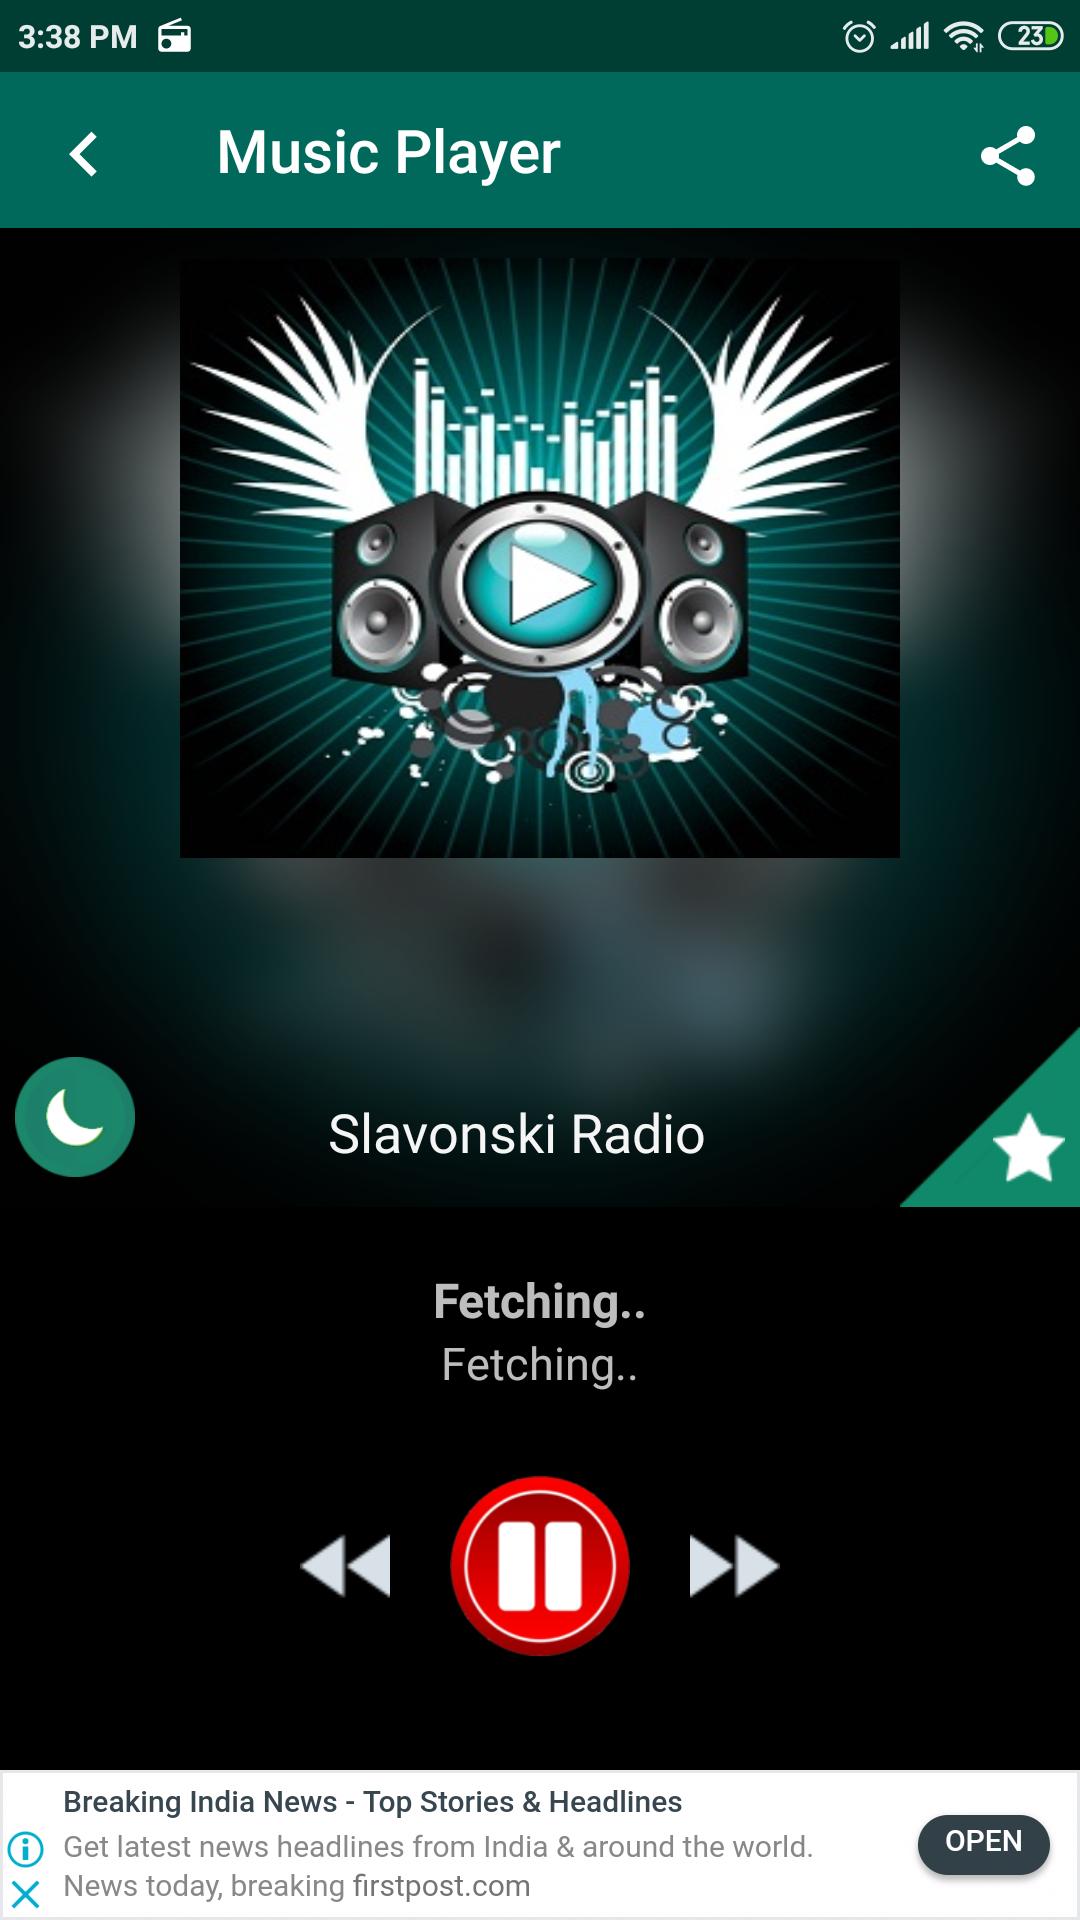 slavonski radio online besplatno for Android - APK Download